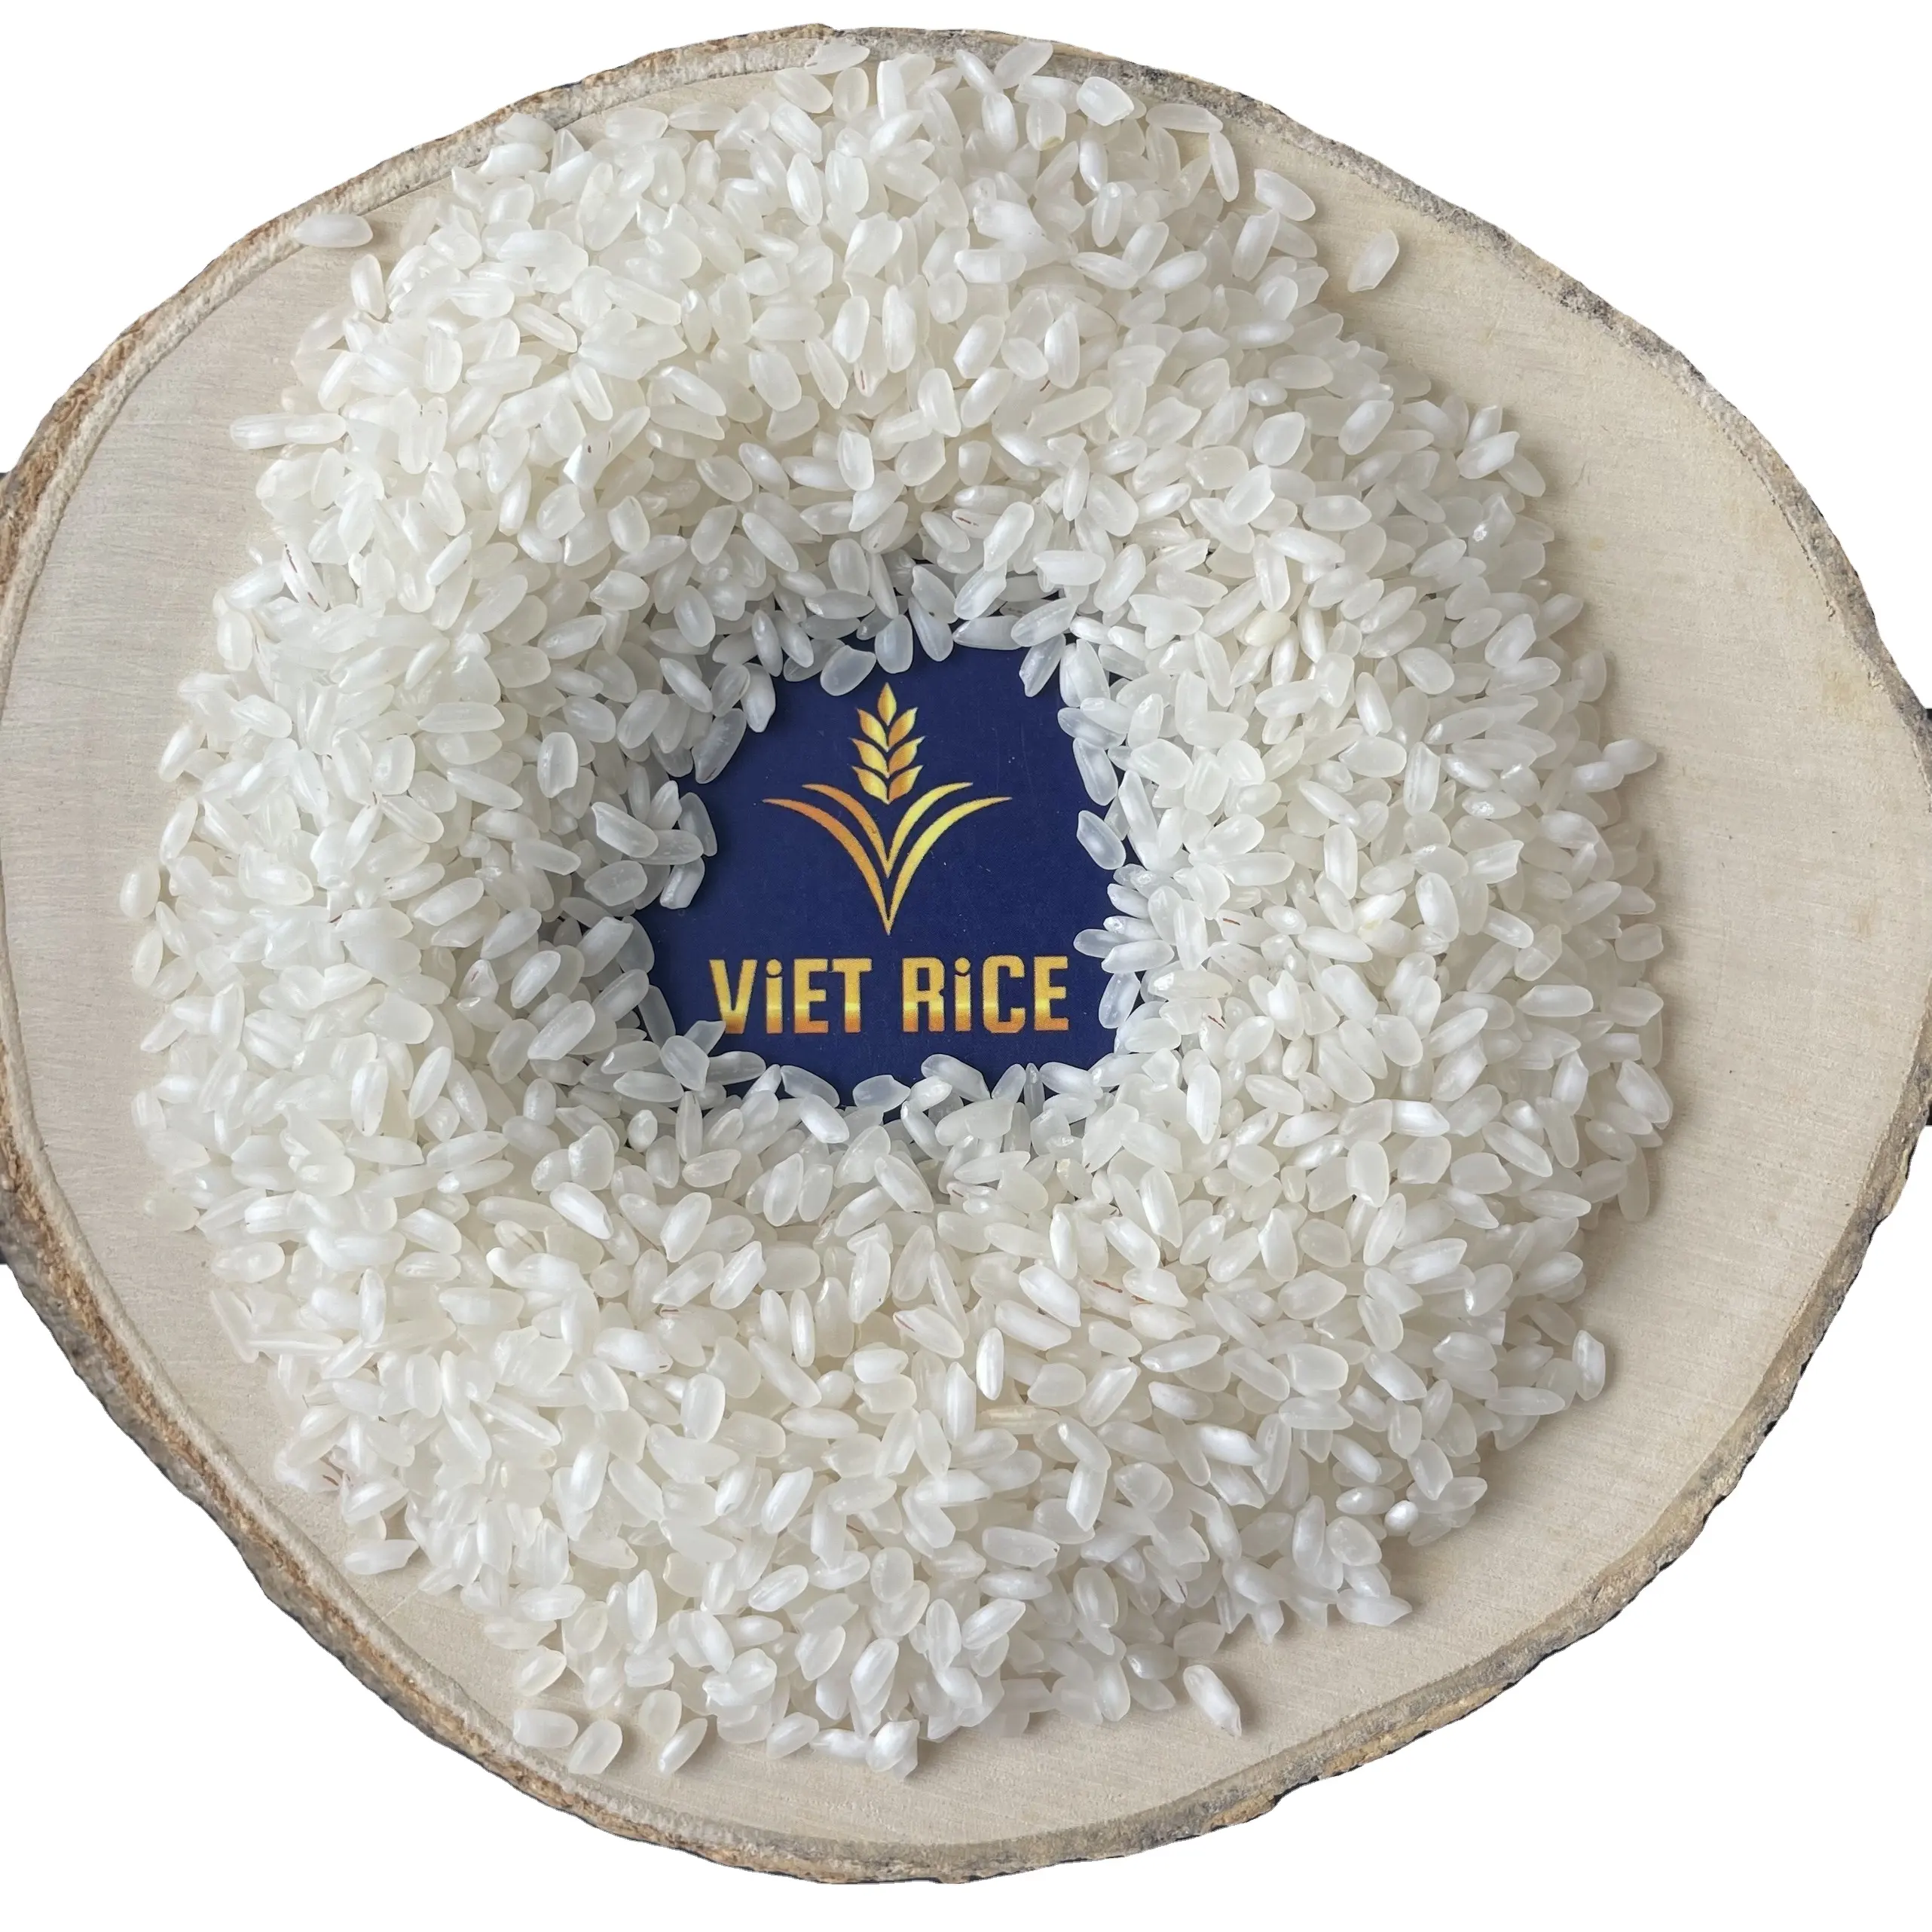 CALROSE RIZ - אורז לבן גרגר קצר 5% שבור מסופק מ-VietRice - יצרן ויצואן אורז מוביל מווייטנאם